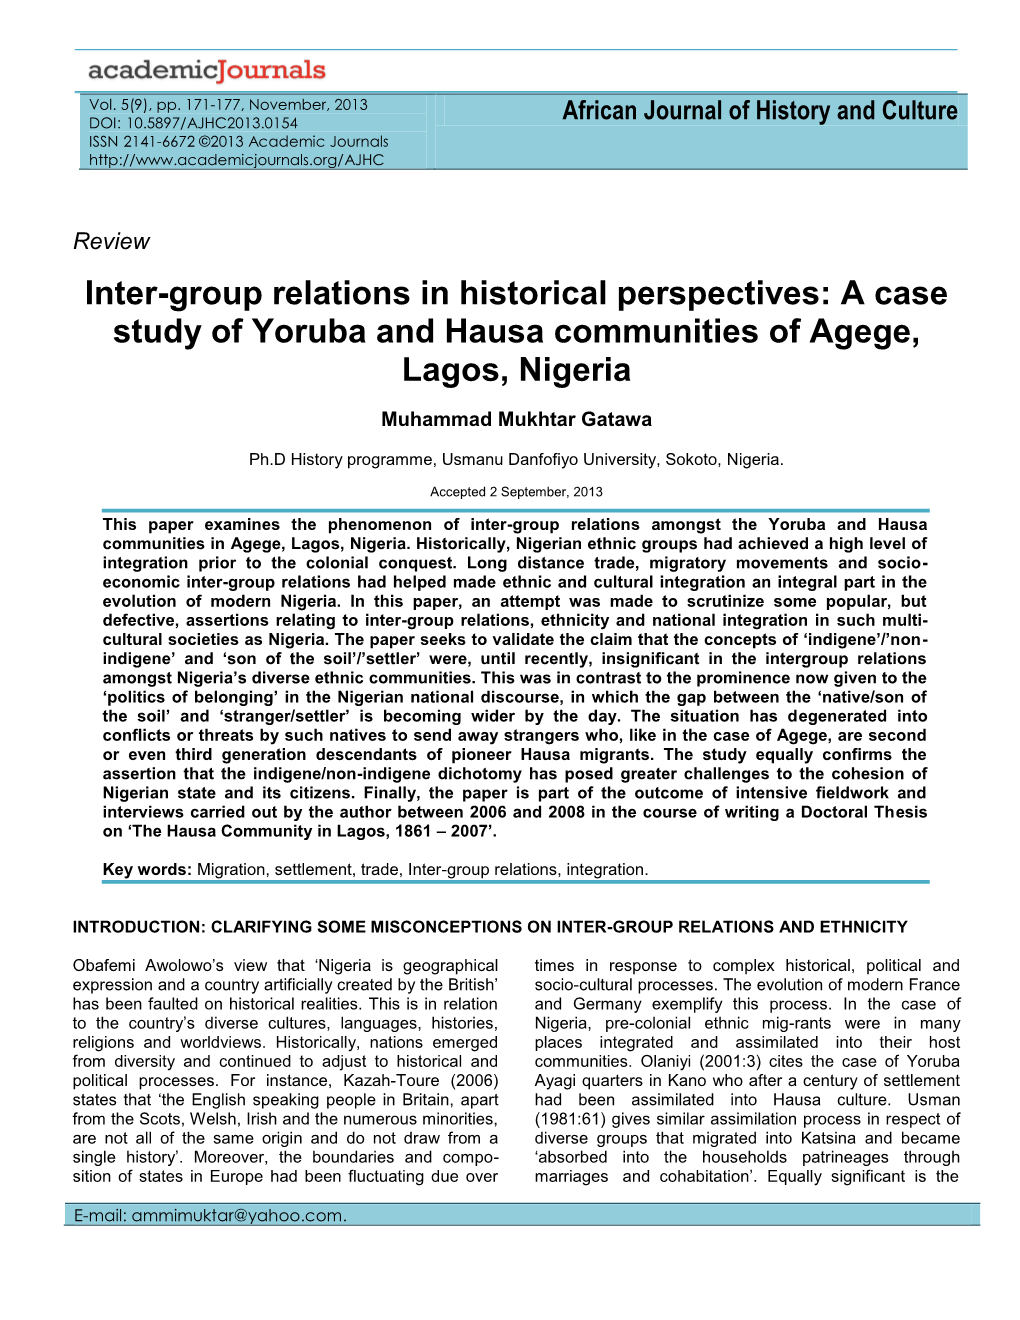 A Case Study of Yoruba and Hausa Communities of Agege, Lagos, Nigeria